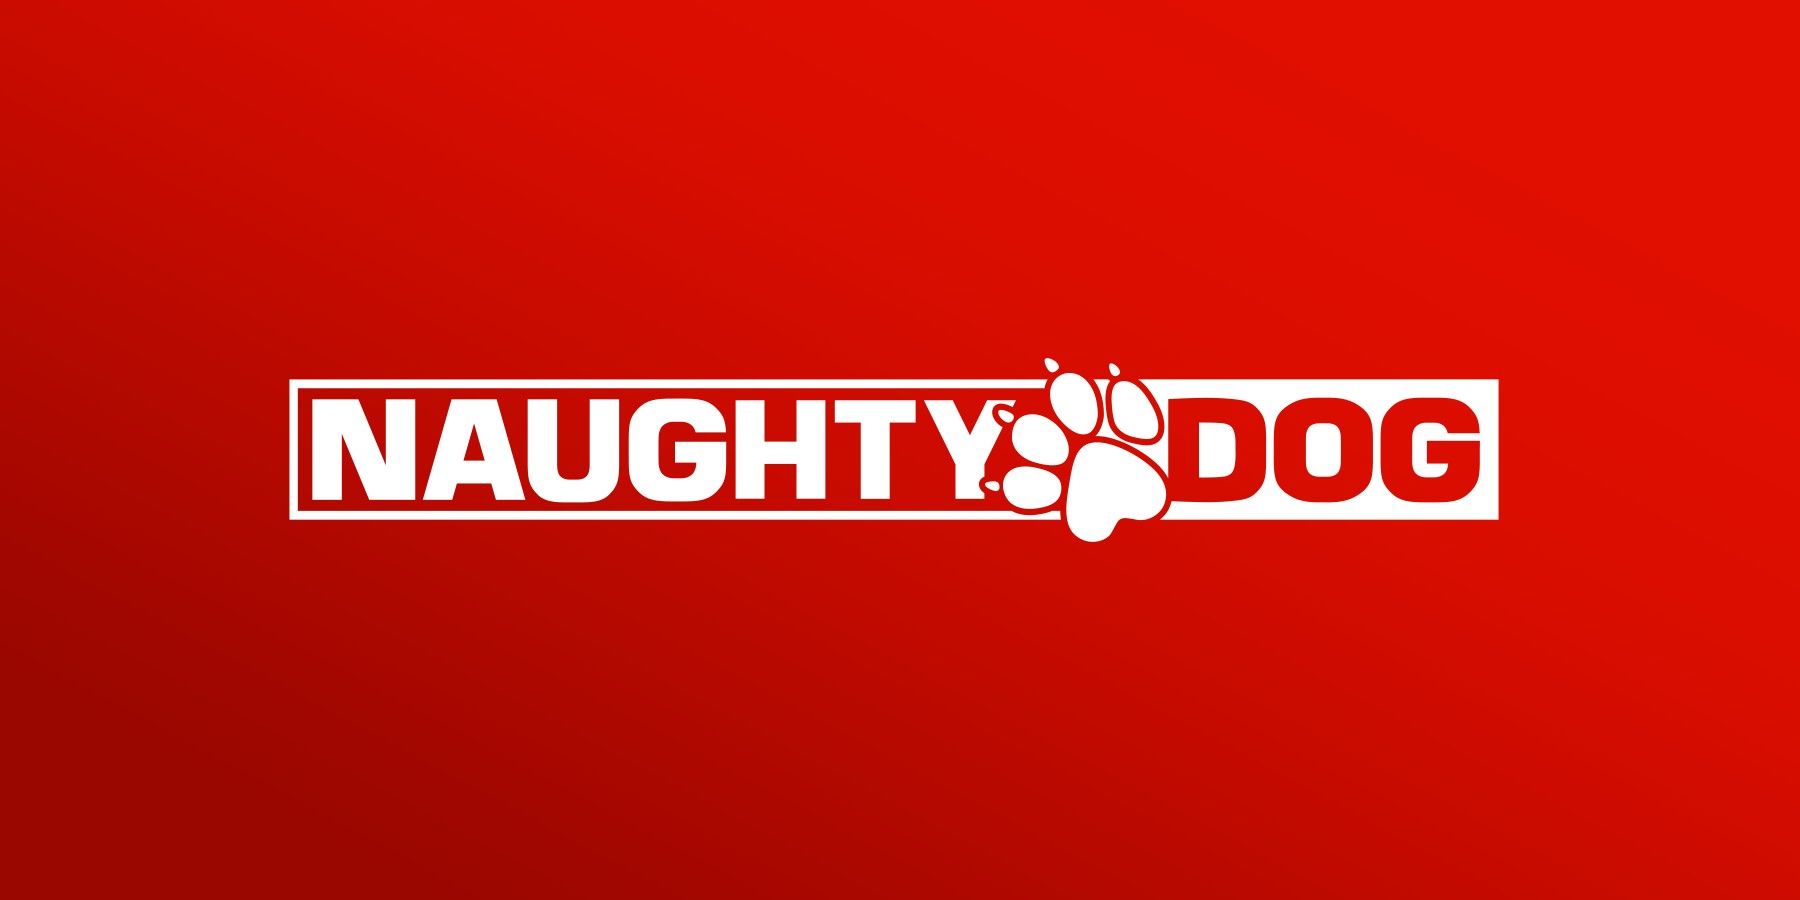 naughty-dog-logo-red